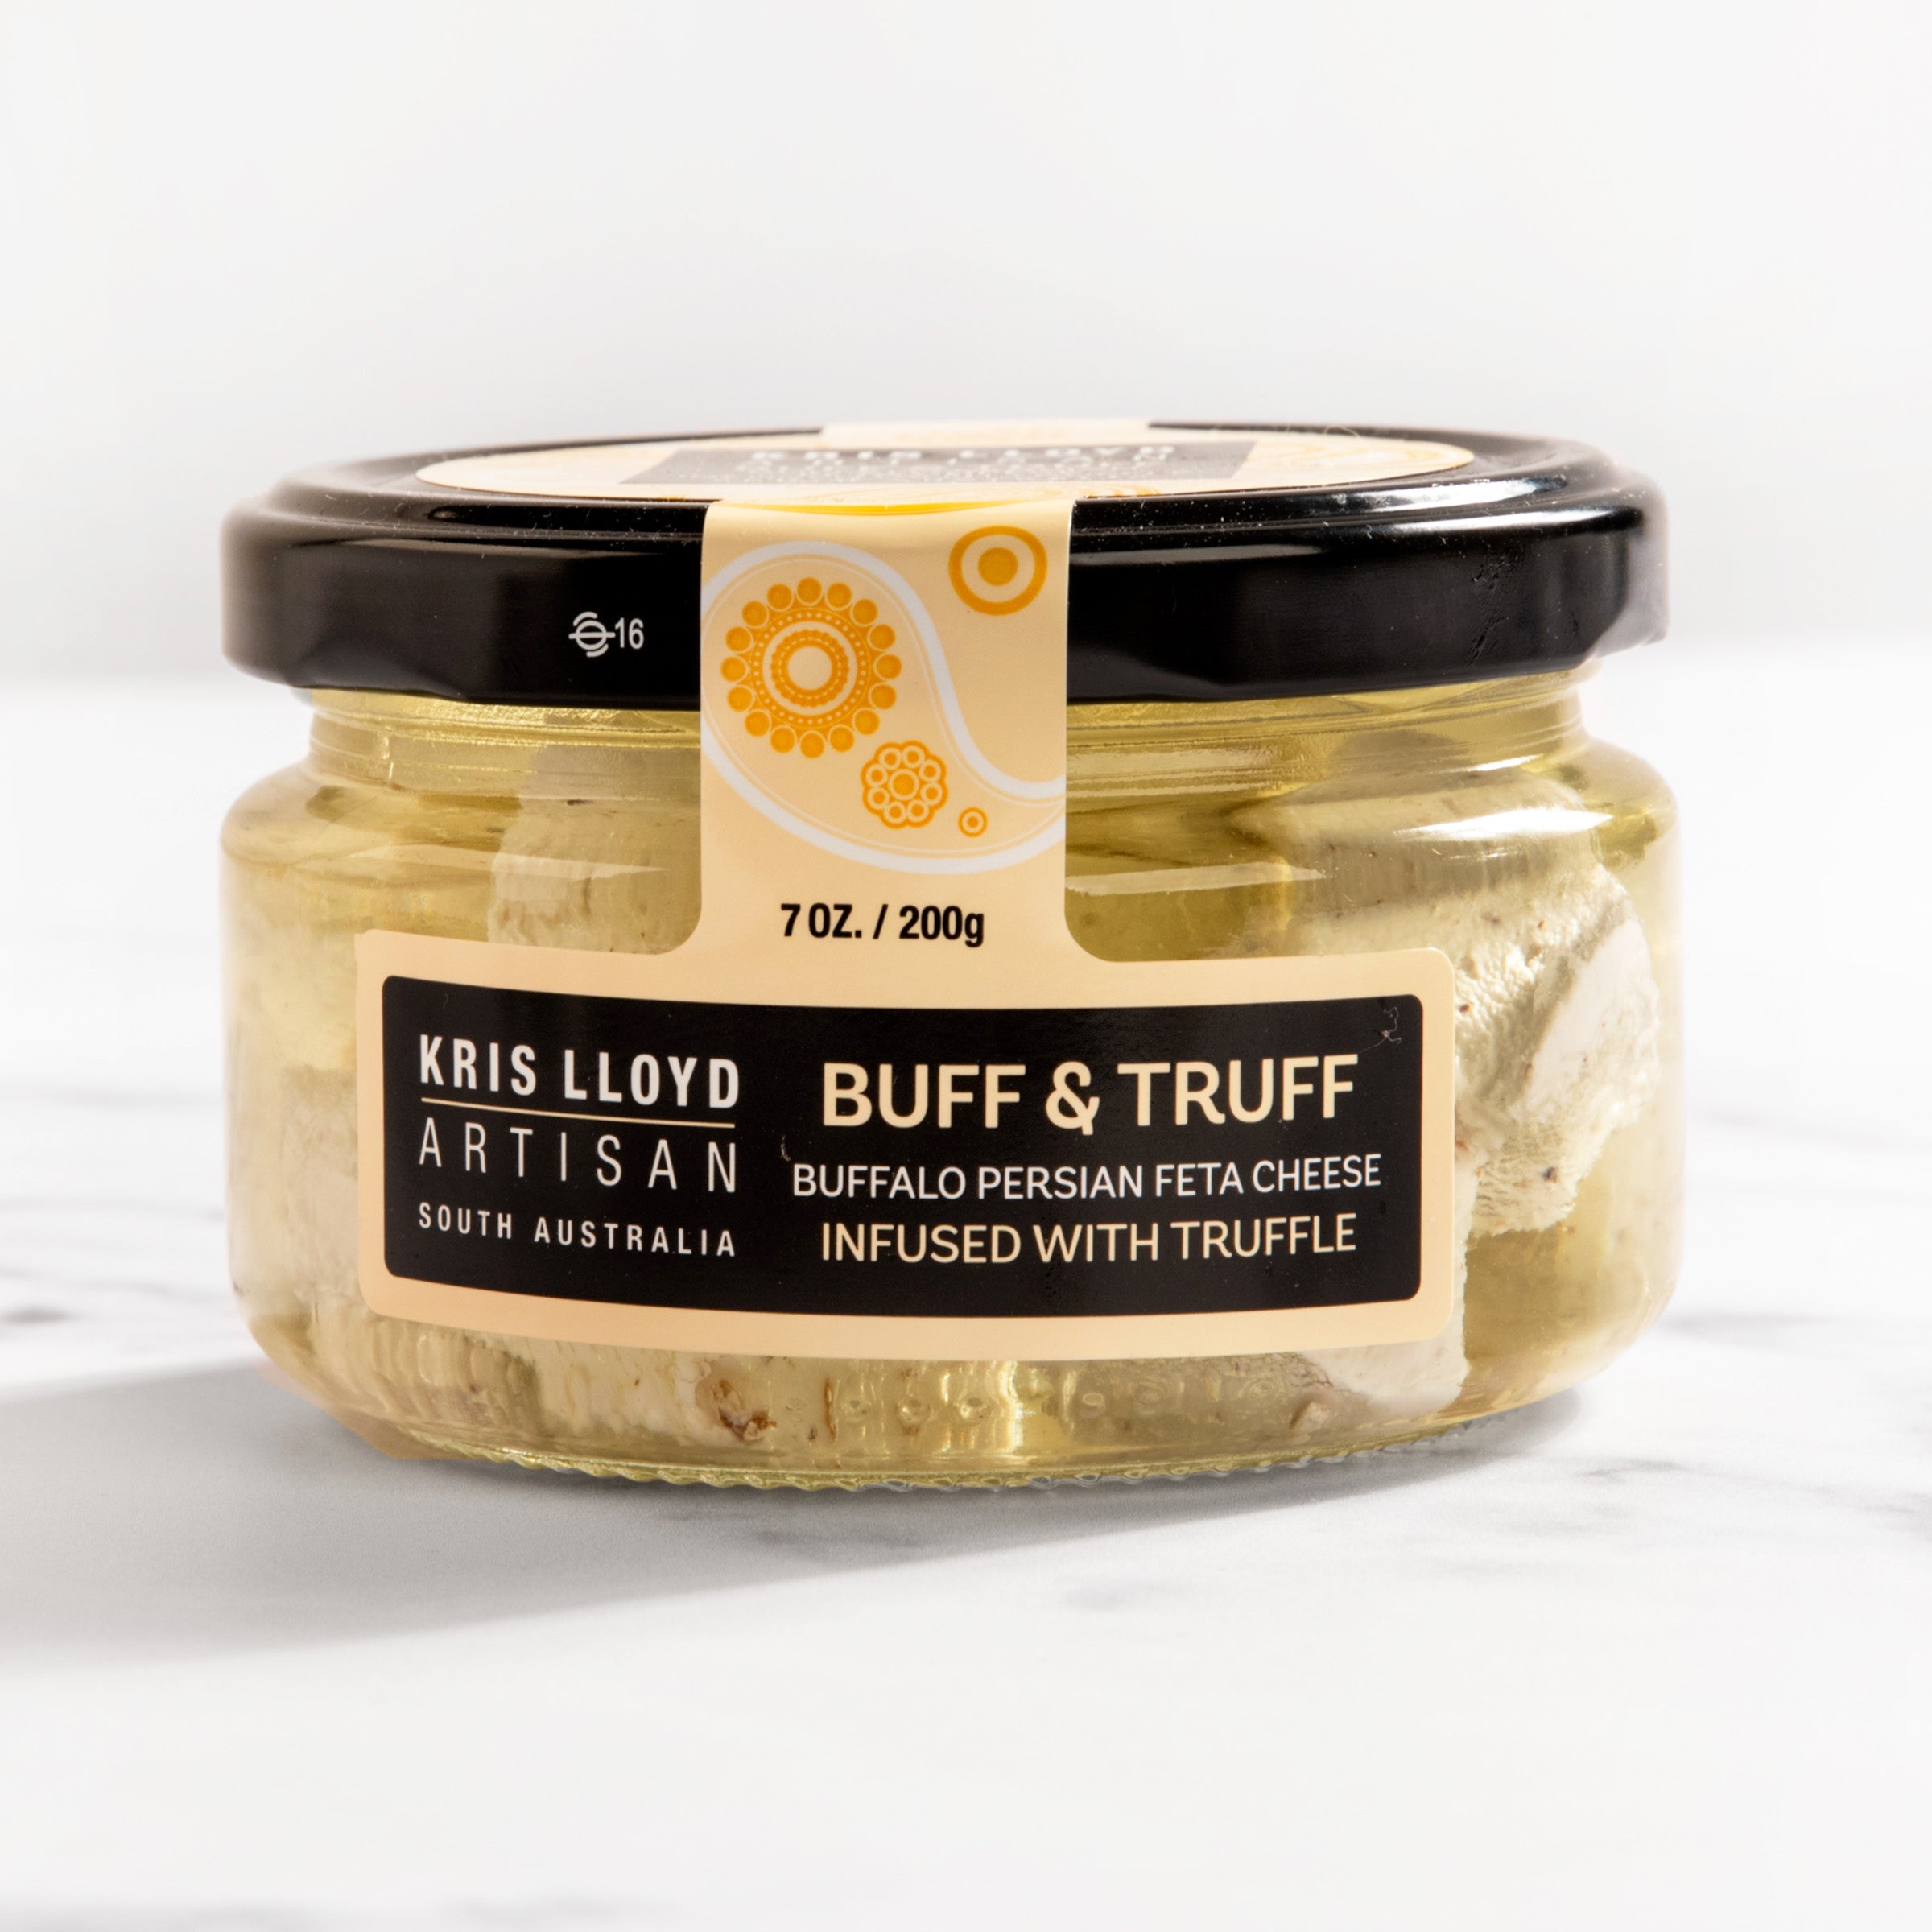 Buff & Truff - Australian Buffalo Persian Feta Cheese Infused with Truffle